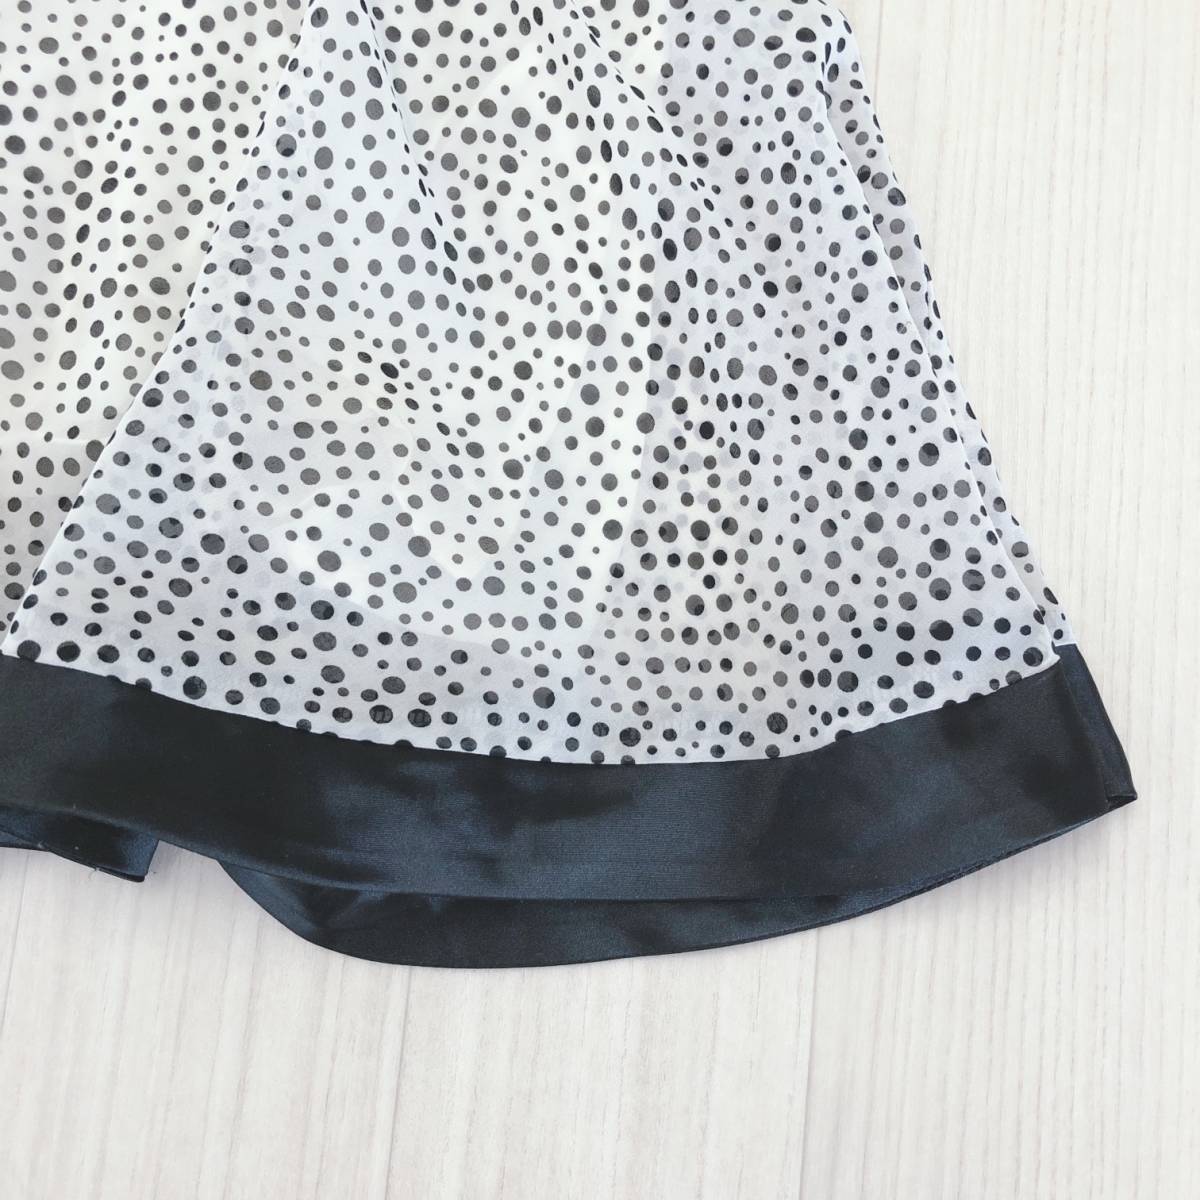 AS0494 INED Ined женский низ русалка юбка колени длина тонкий 7 номер S размер черный чёрный белый точка полька-дот Showa Retro 